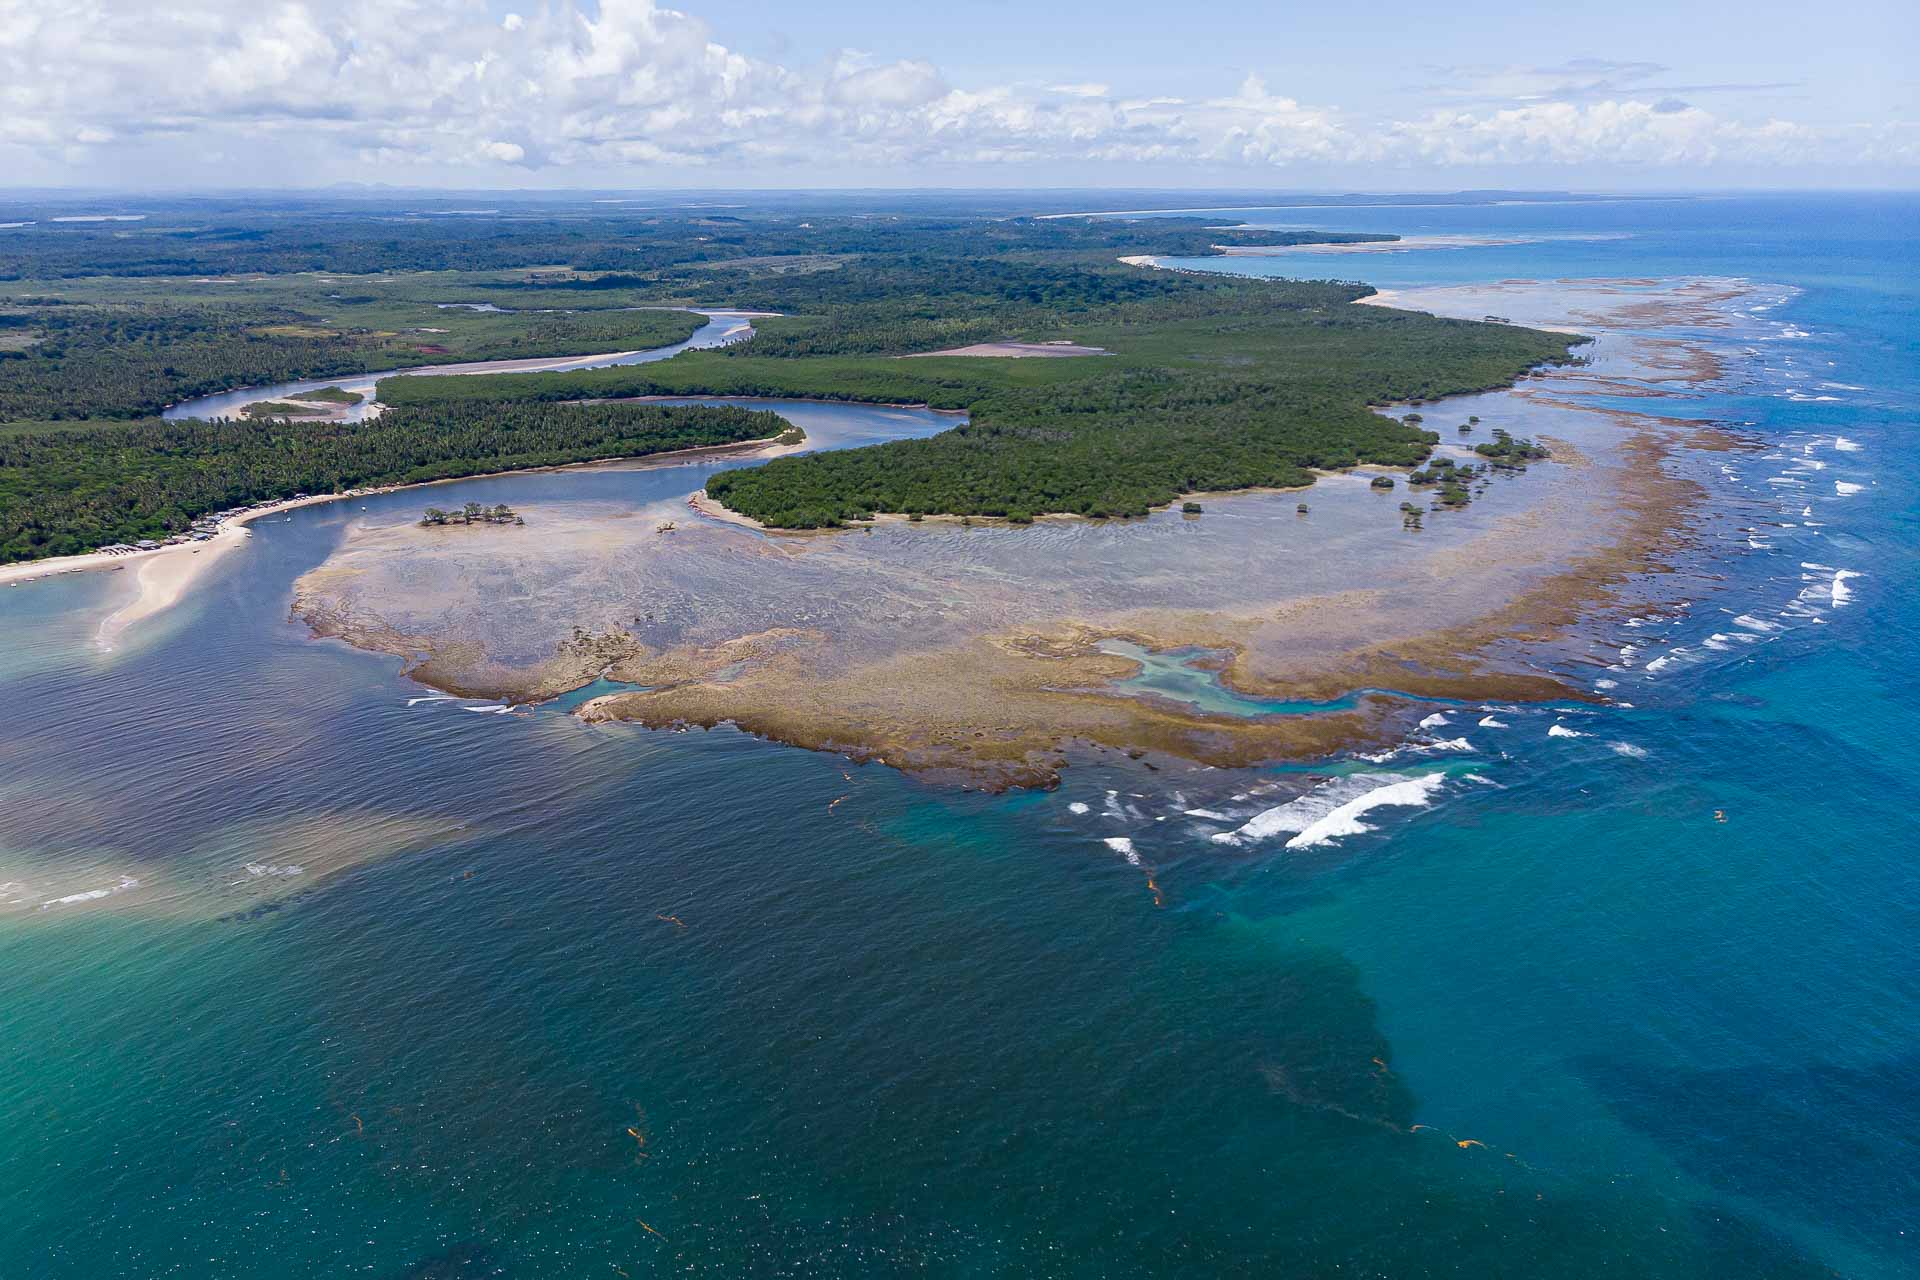 Aerial view of the coast of Boipeba Brazil full of coral reefs